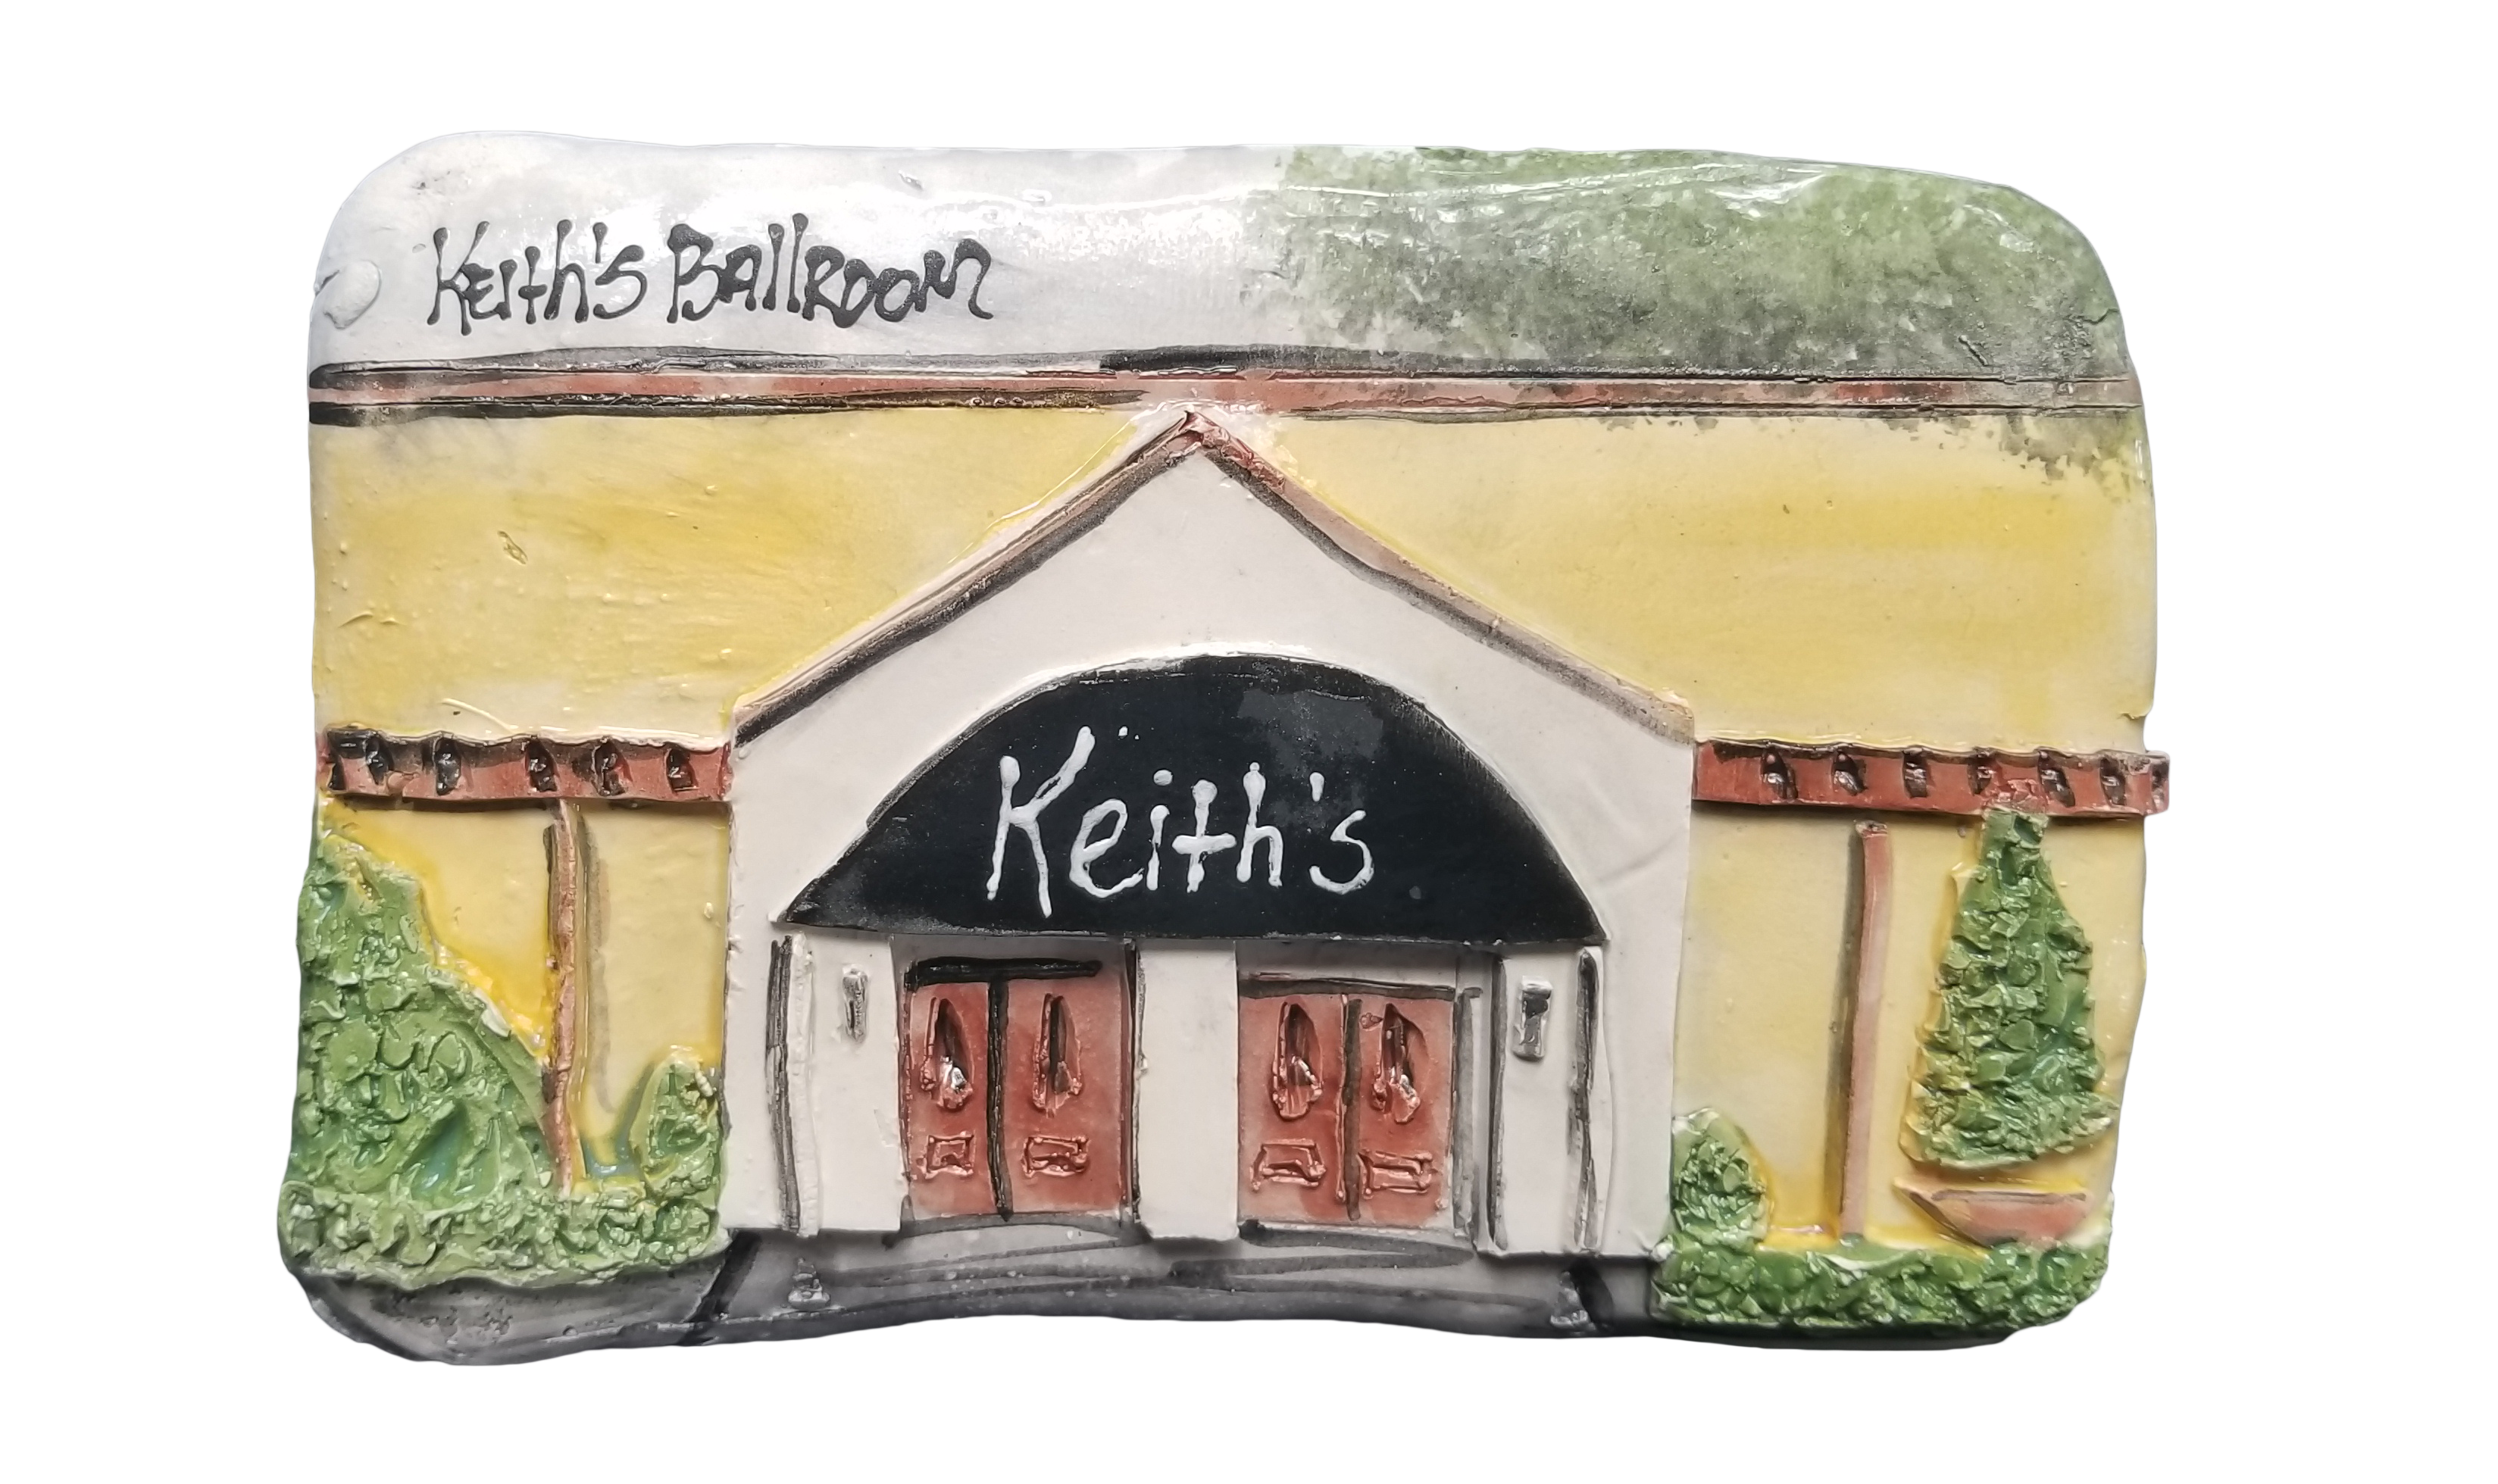 Keith’s Ballroom